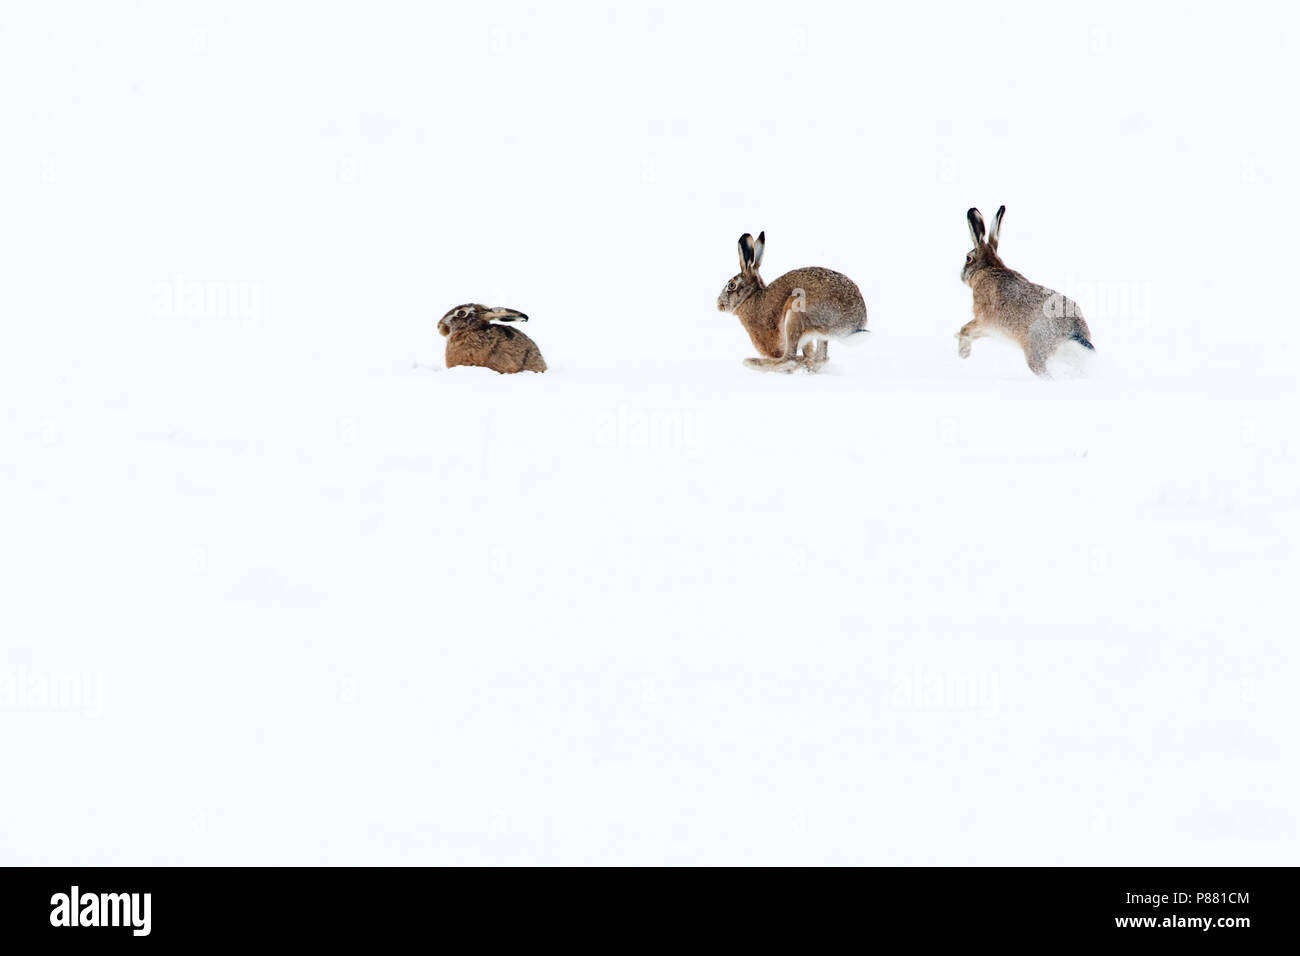 Europese Haas in de sneeuw, Europäische Hase im Schnee Stockfoto